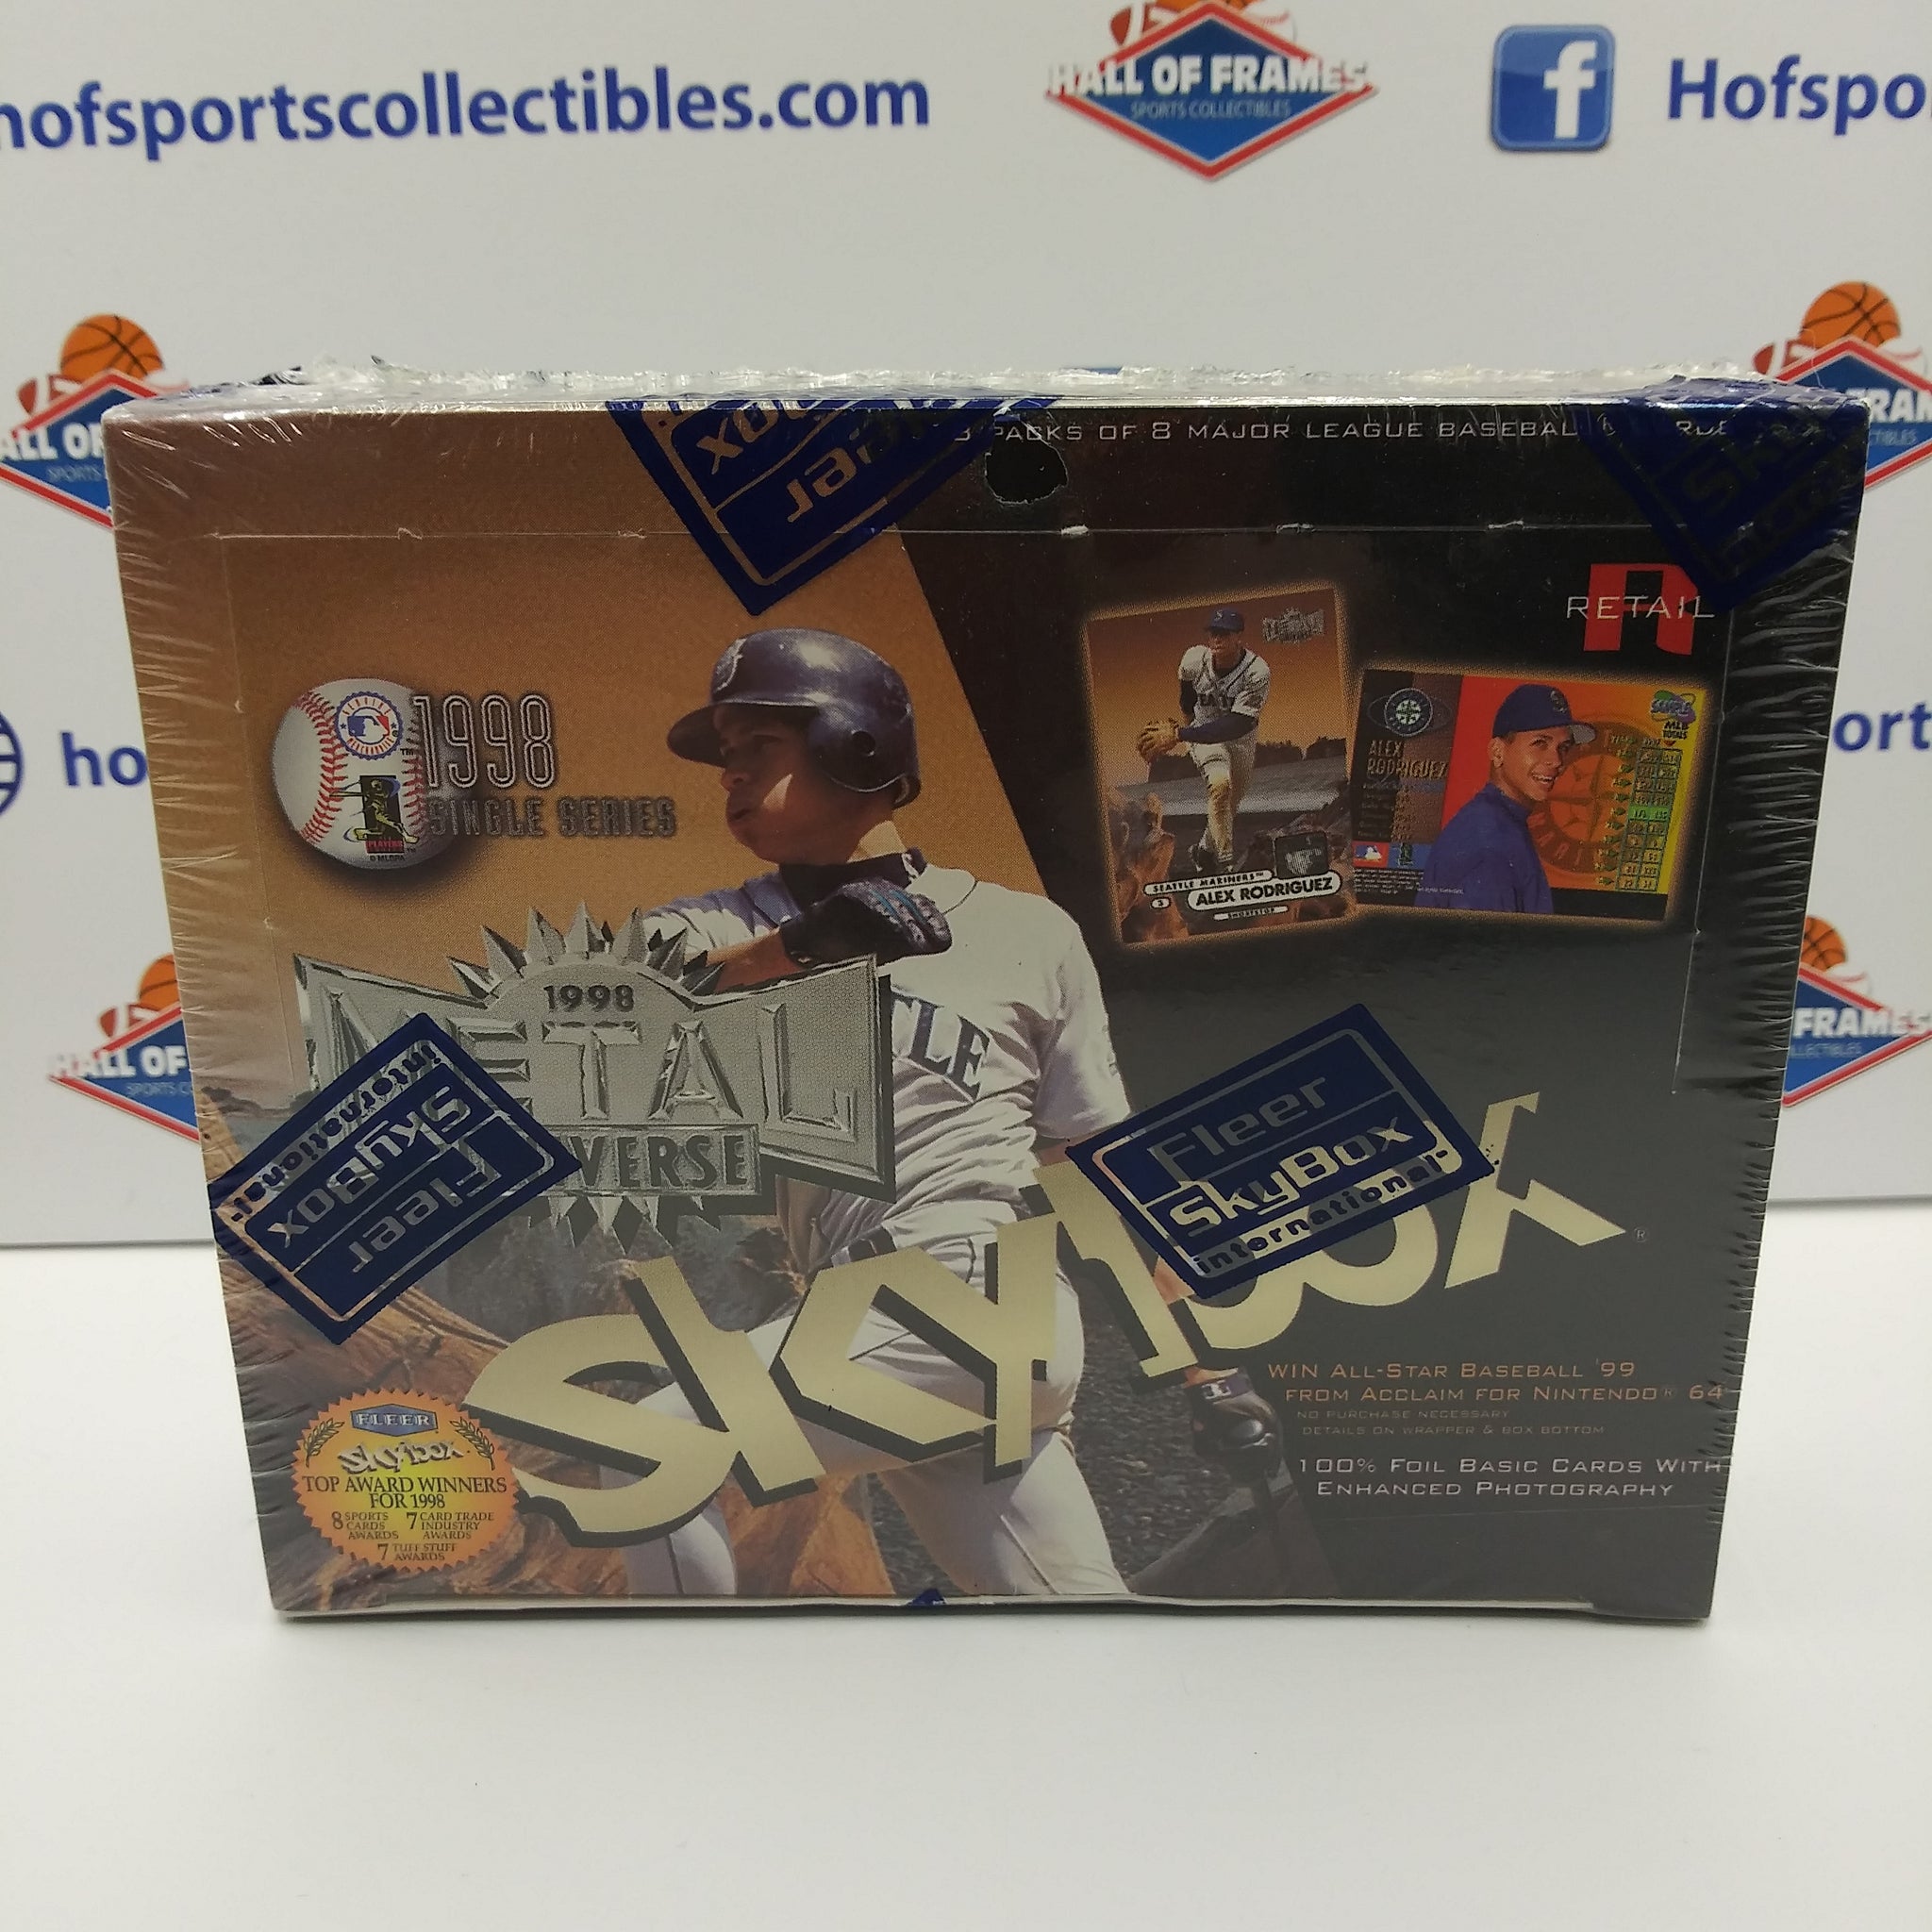 1998 FLEER SKYBOX METAL UNIVERSE MLB SEALED RETAIL BOX! LOOK FOR JETER PMG'S!